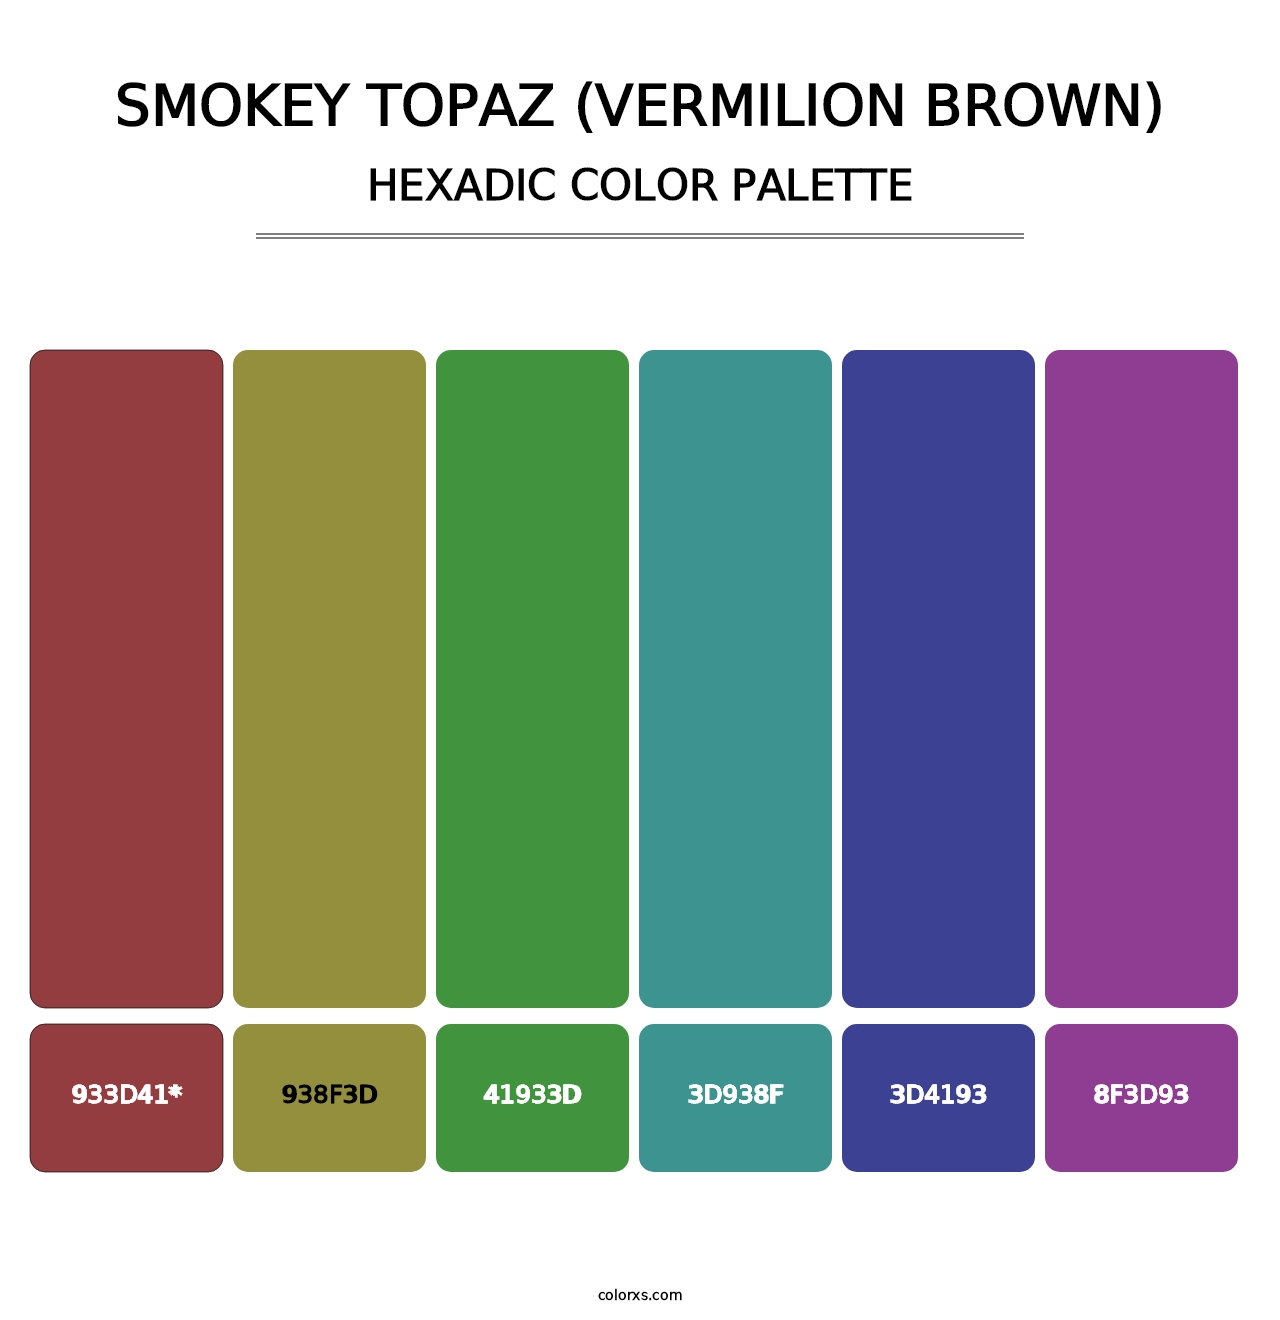 Smokey Topaz (Vermilion Brown) - Hexadic Color Palette